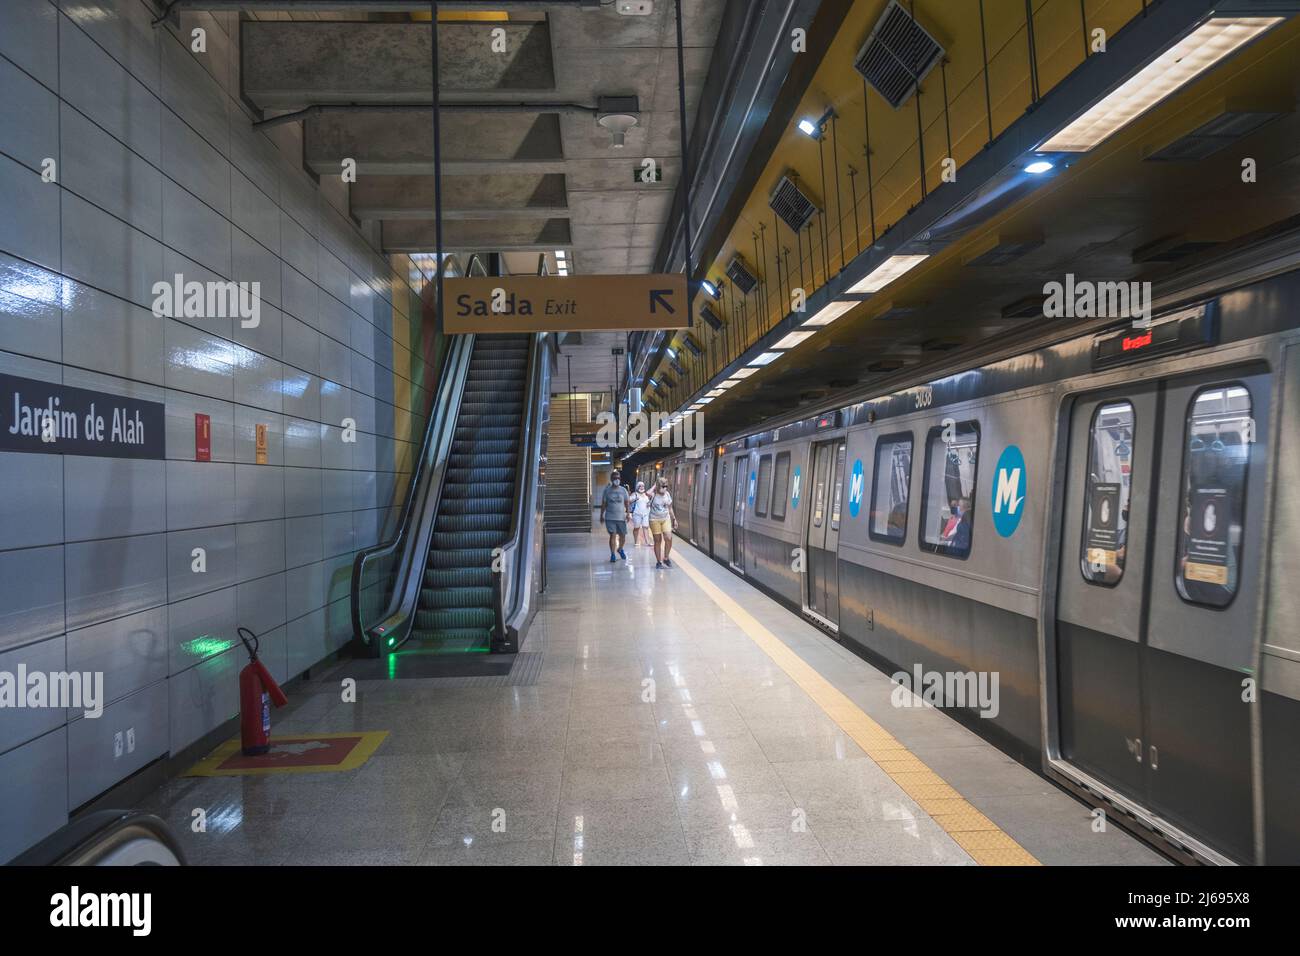 Interior of Jardim de Alah metro station, subway train on the platform, Rio de Janeiro, Brazil Stock Photo